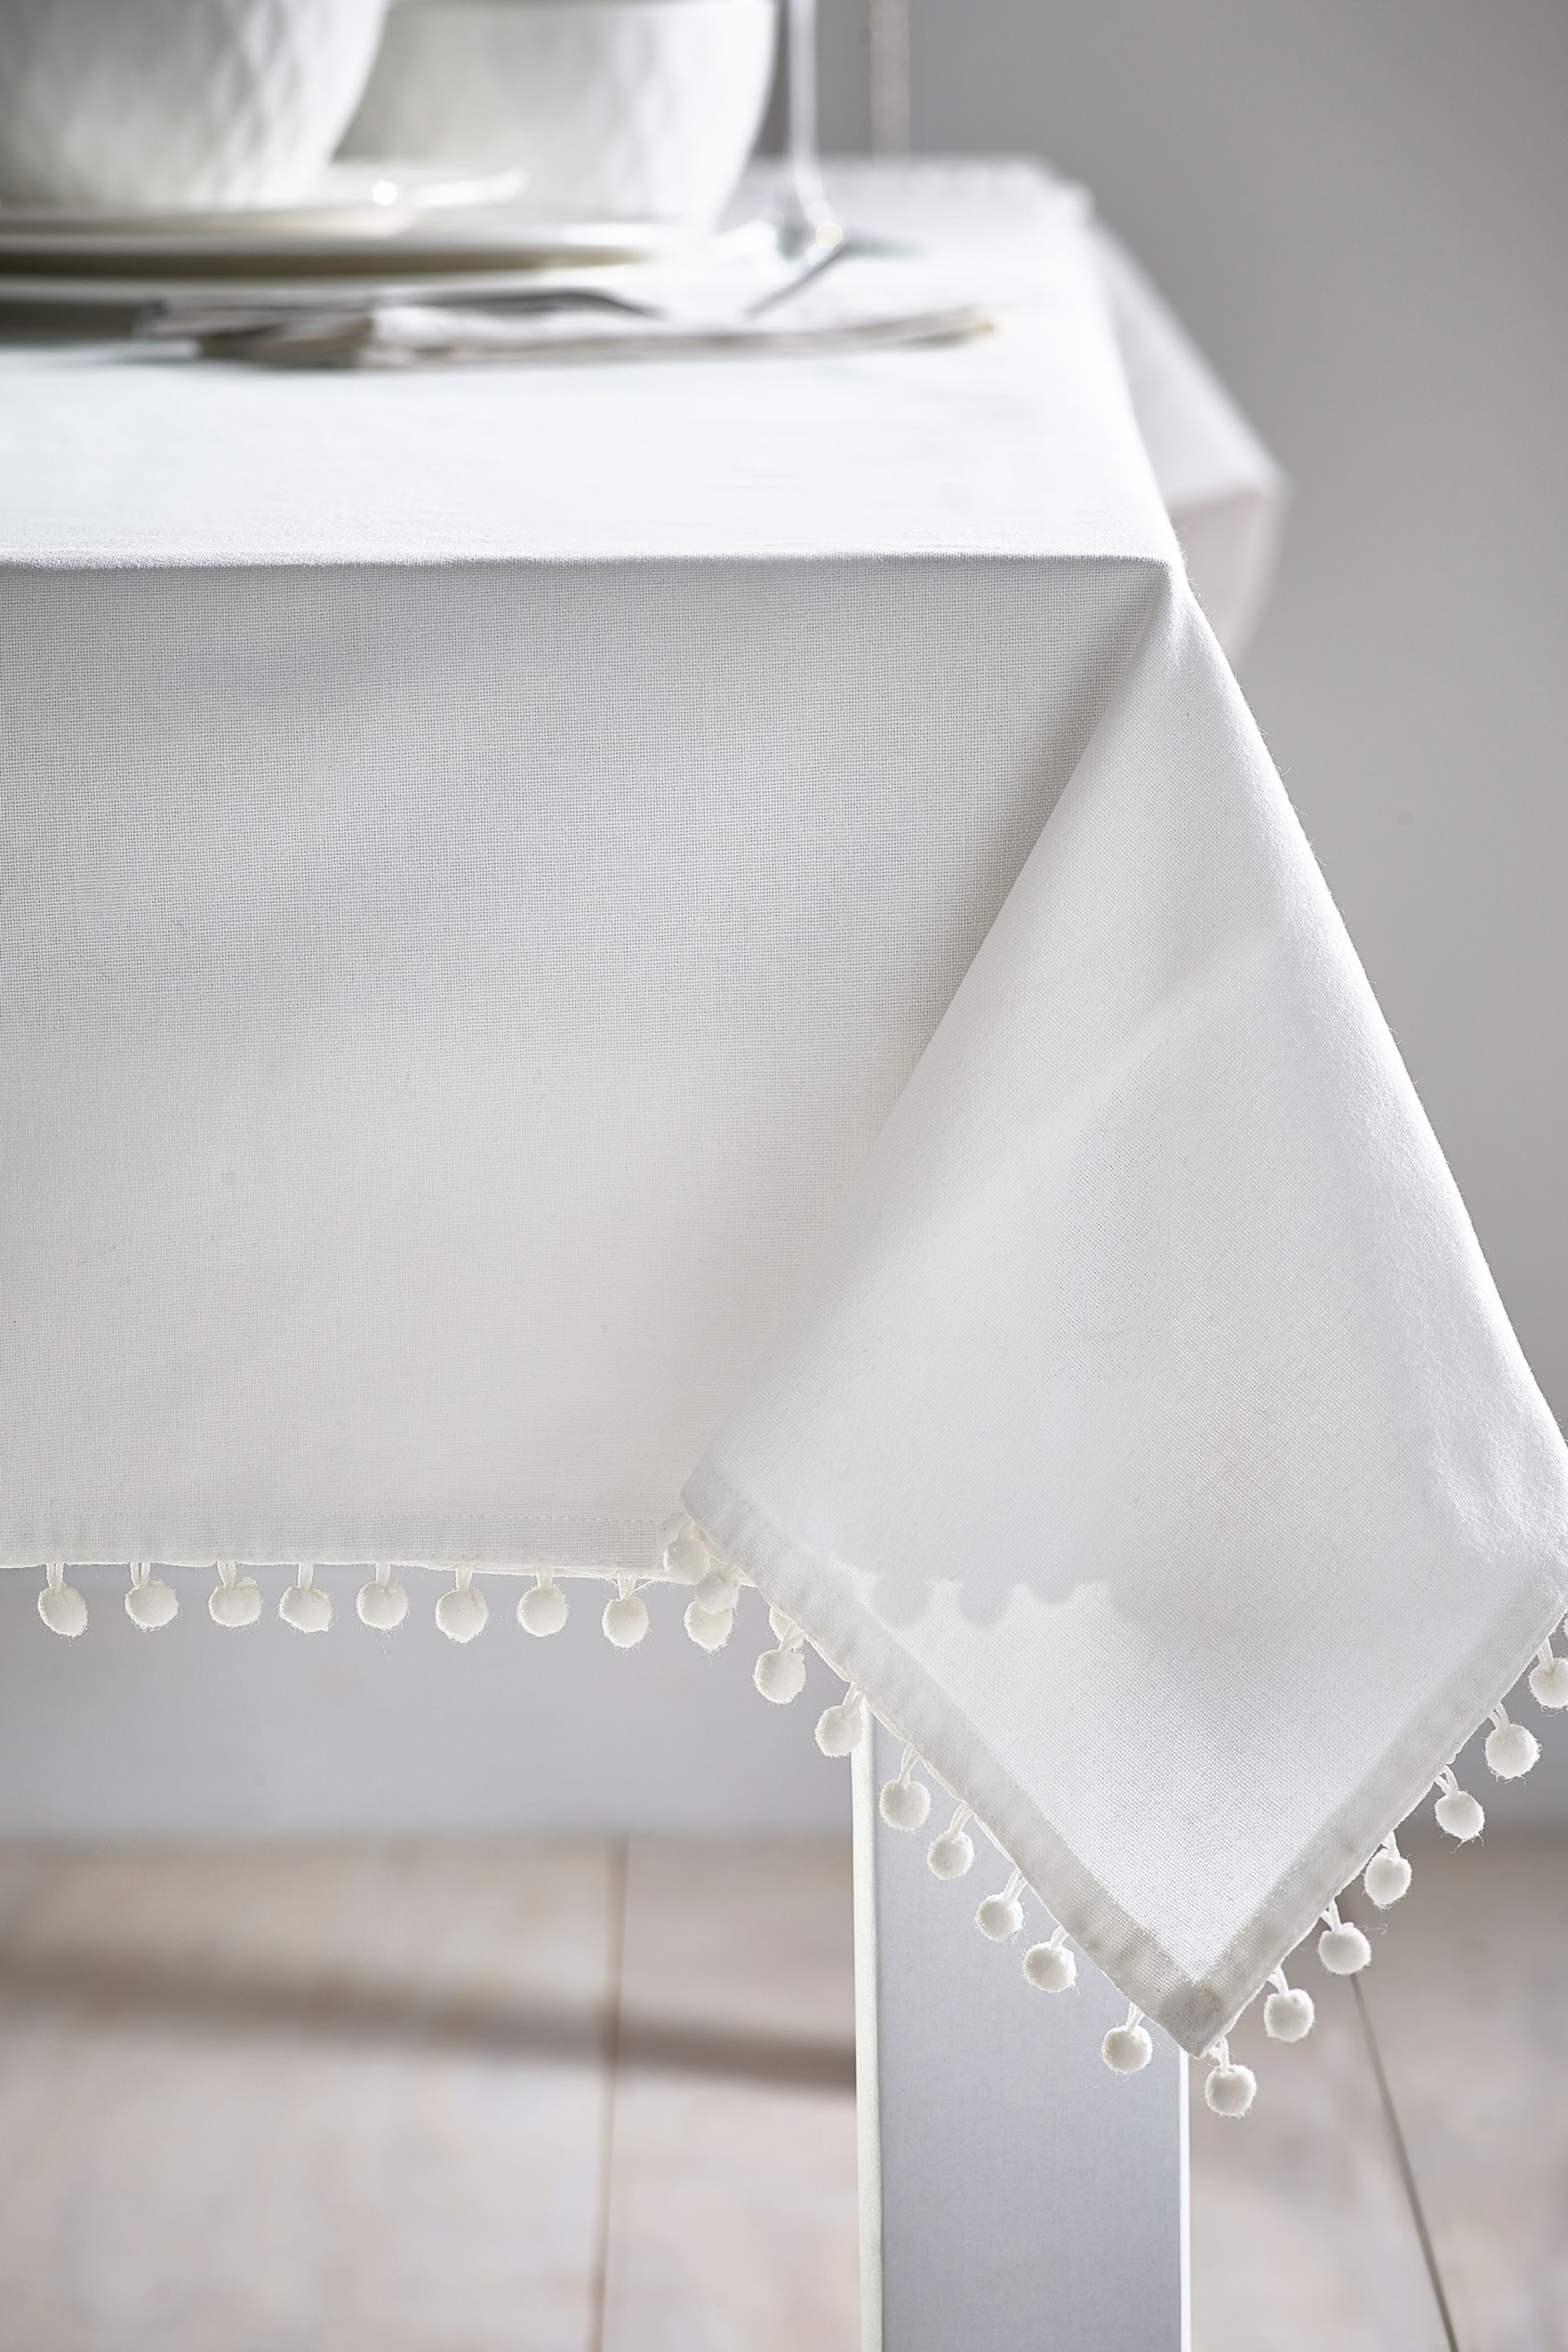 White Pom Pom Tablecloth and Napkins Table Cloth - Image 1 of 1